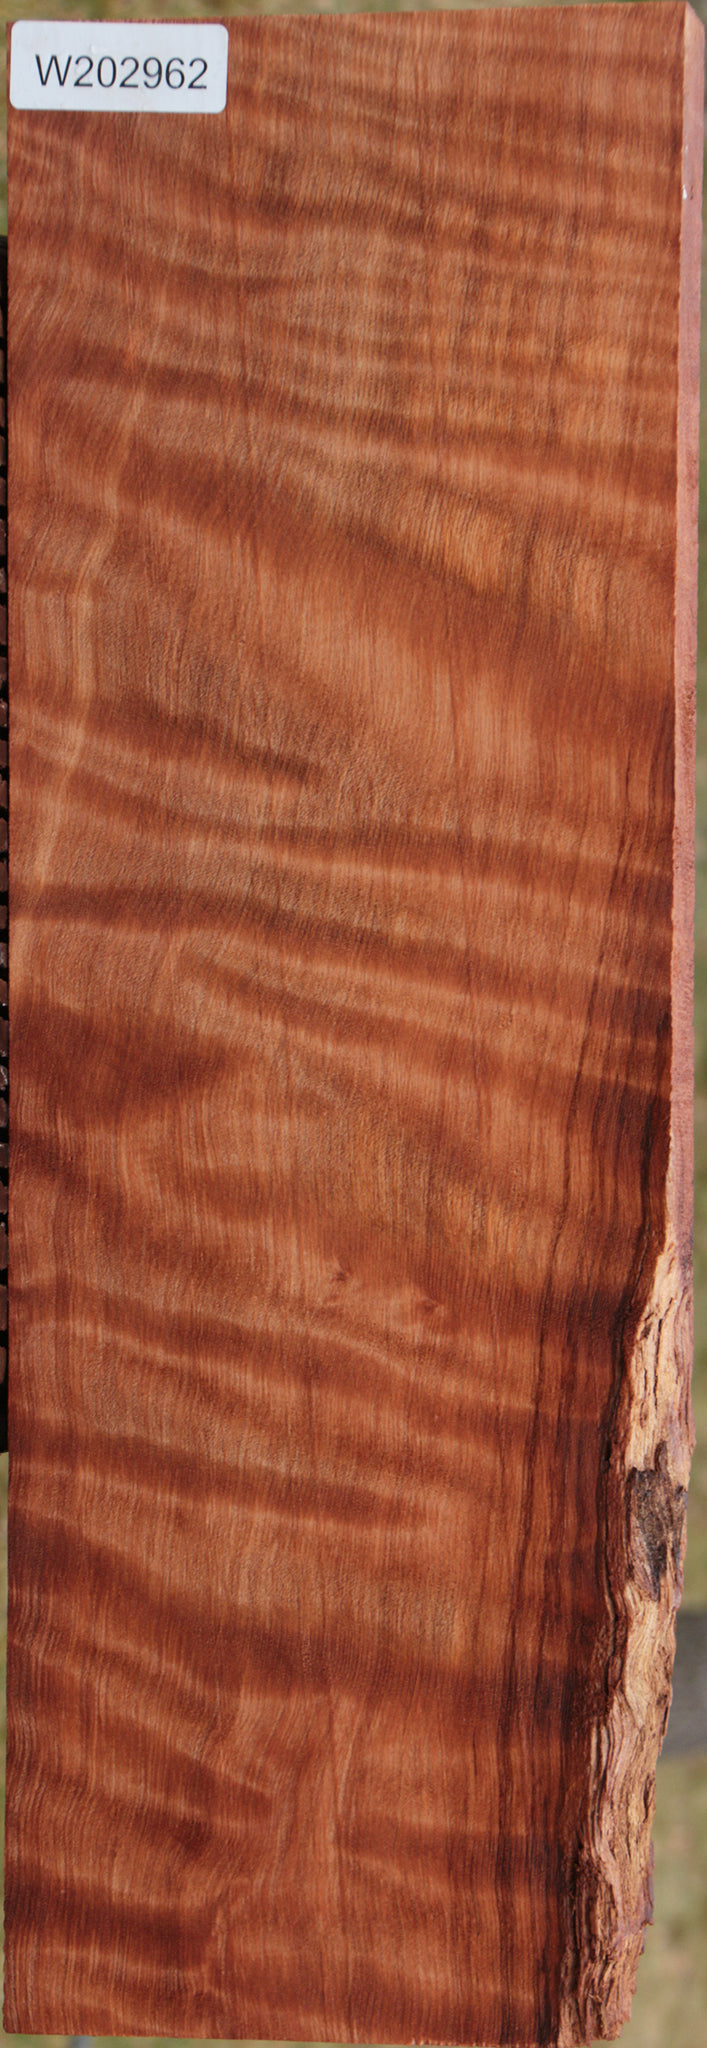 Curly Redwood Lumber